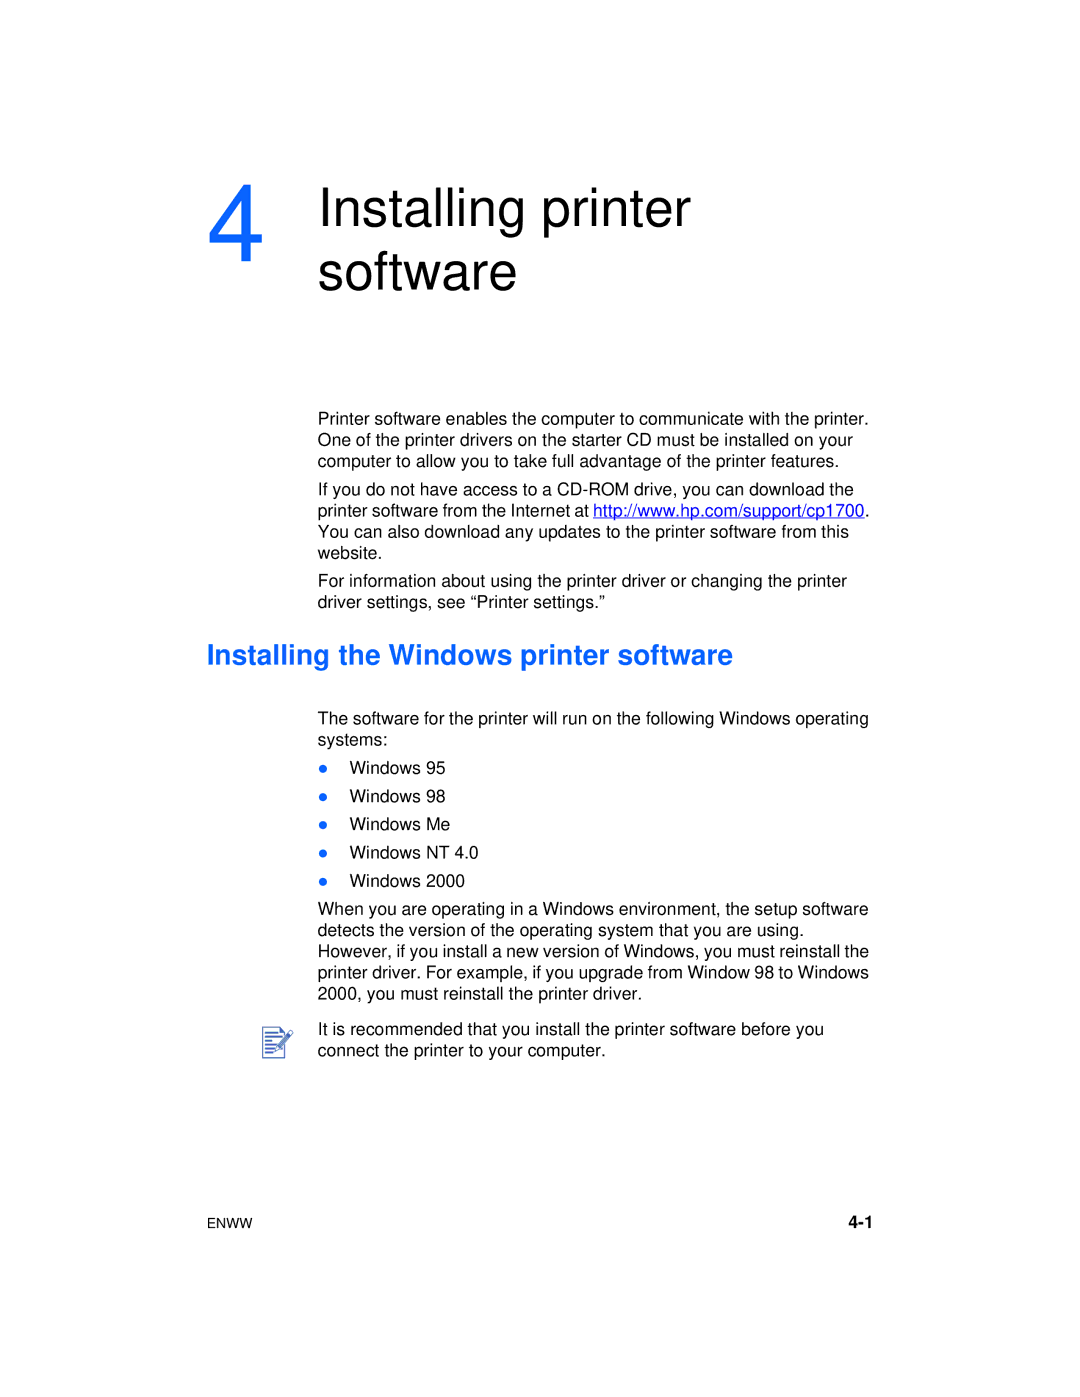 HP Color Inkjet cp1700 manual Installingsoftware printer, Installing the Windows printer software 